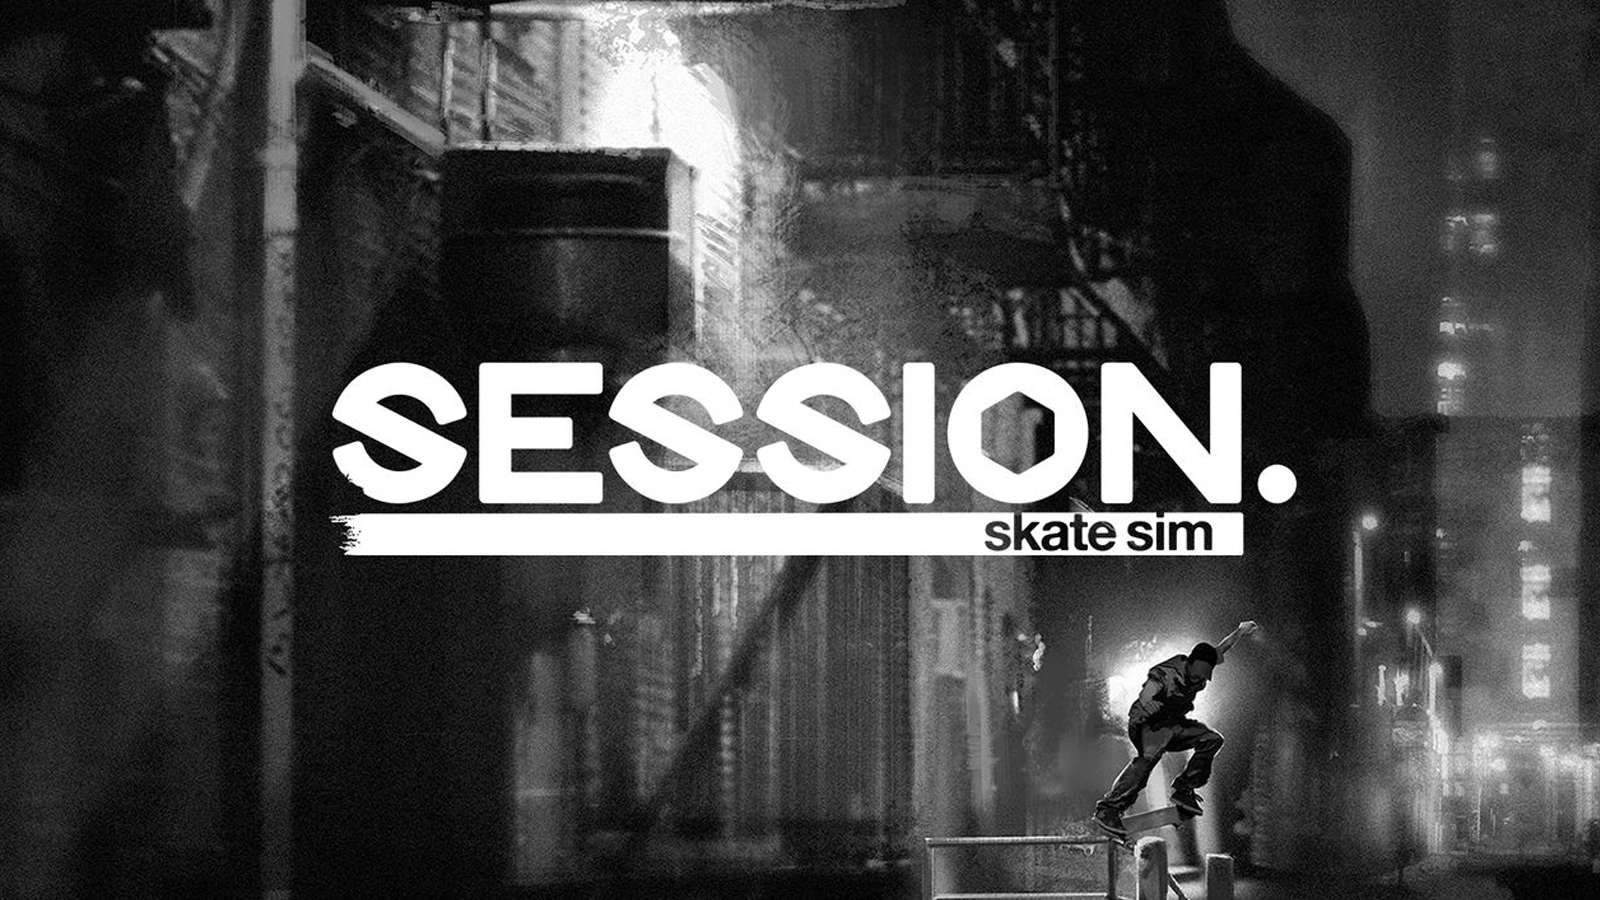 An image of Session Skate Sim